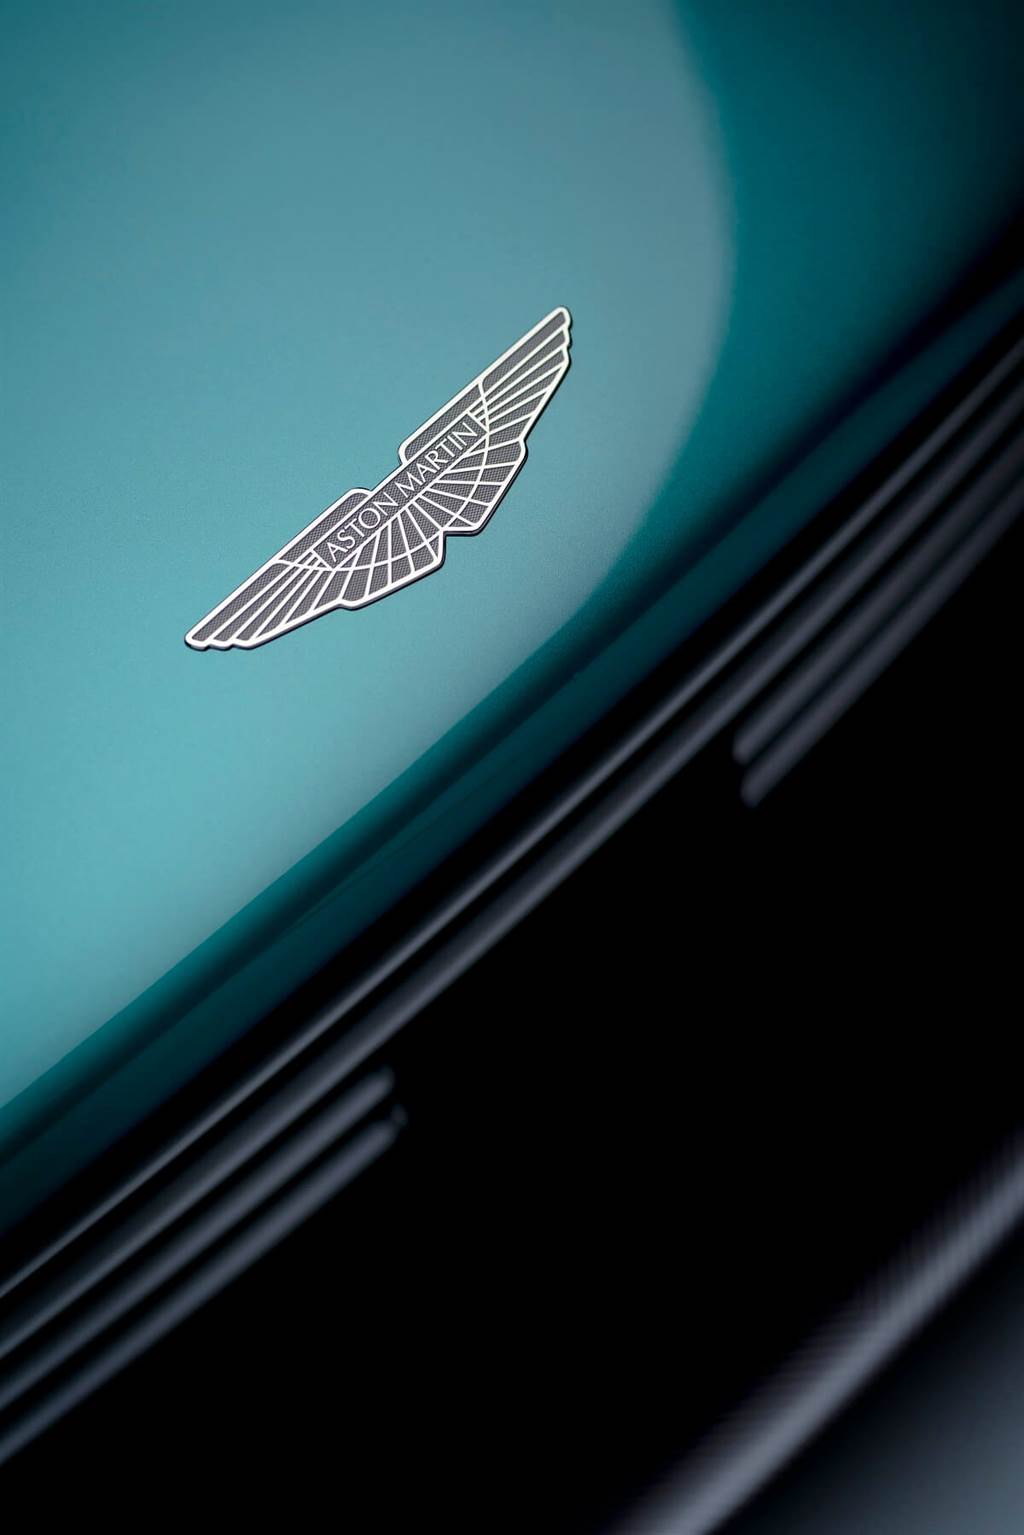 Aston Martin Valhalla正式量產車亮相！目標：紐北賽道單圈6分30秒內
